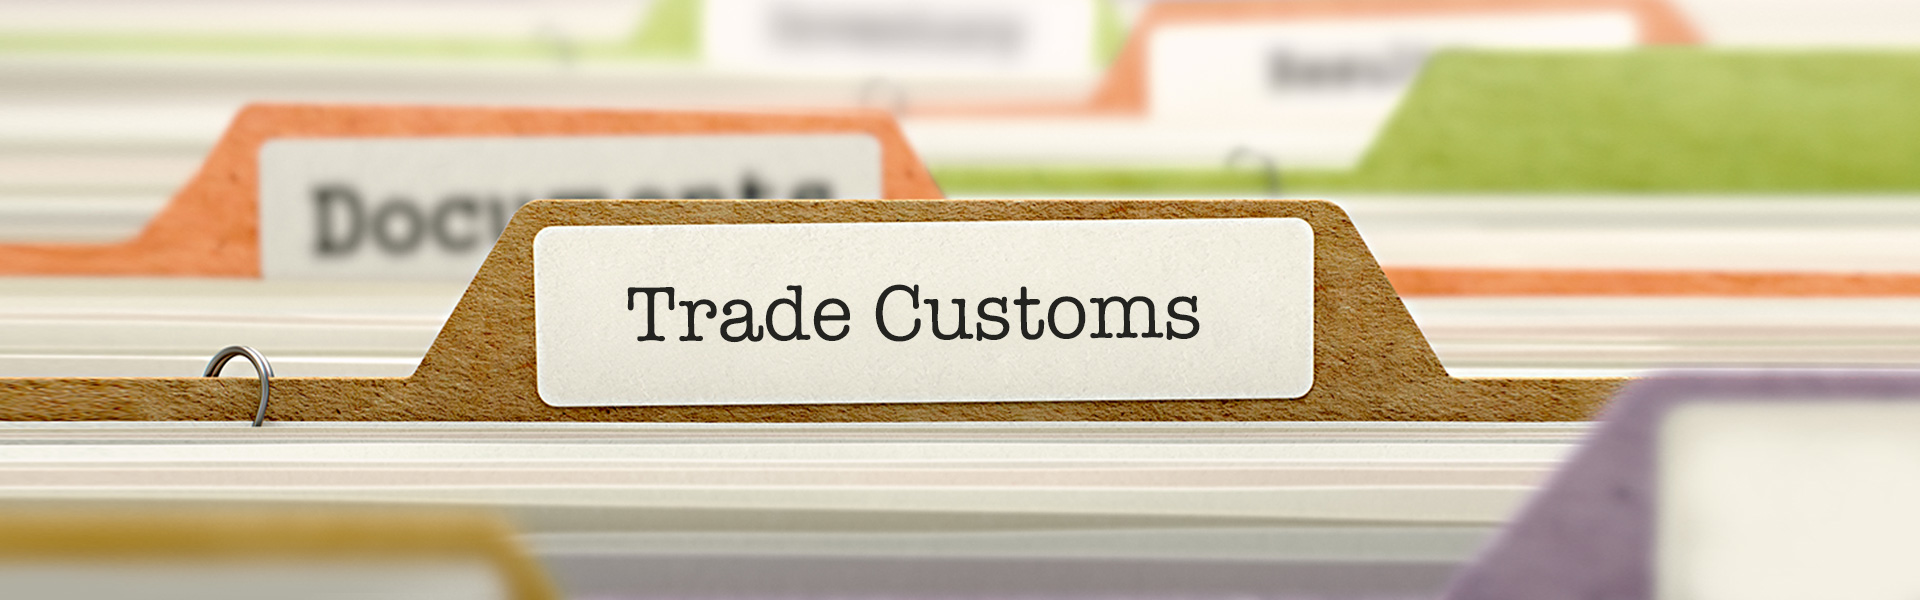 OceanWild Design trade customs